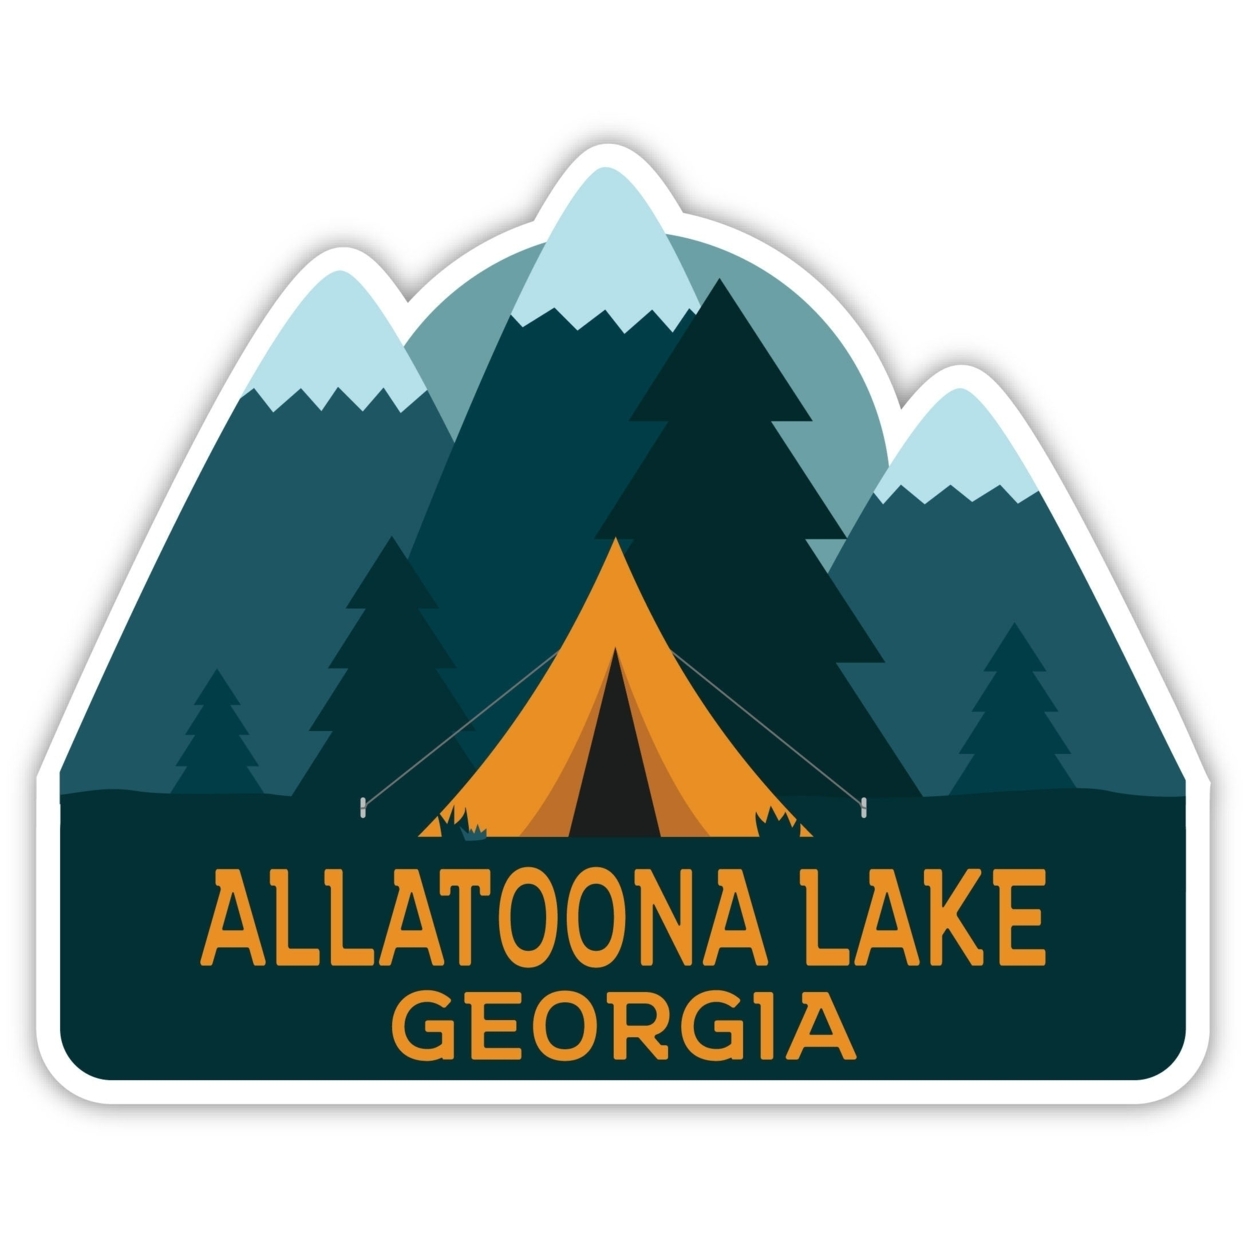 Allatoona Lake Georgia Souvenir Decorative Stickers (Choose Theme And Size) - 4-Pack, 2-Inch, Tent